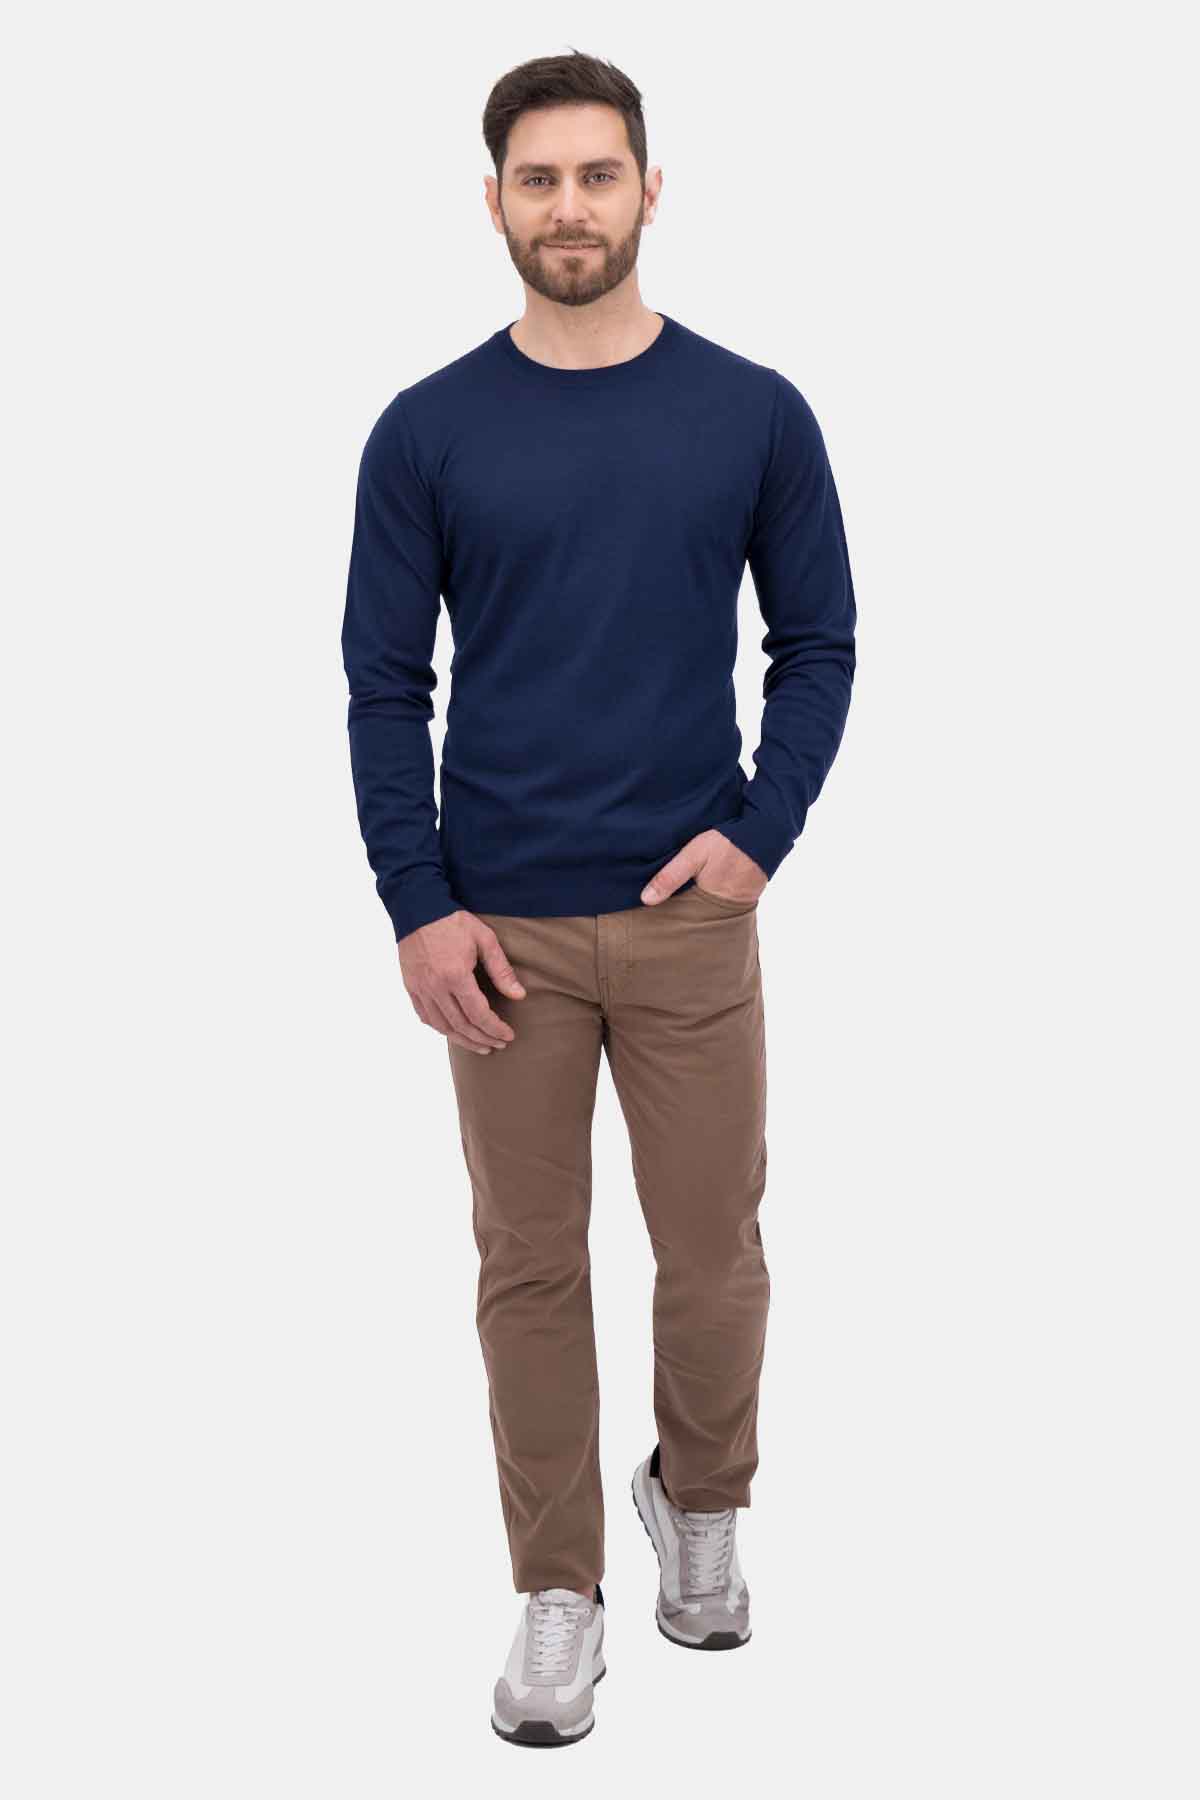 Sweater Calderoni Contemporary fit